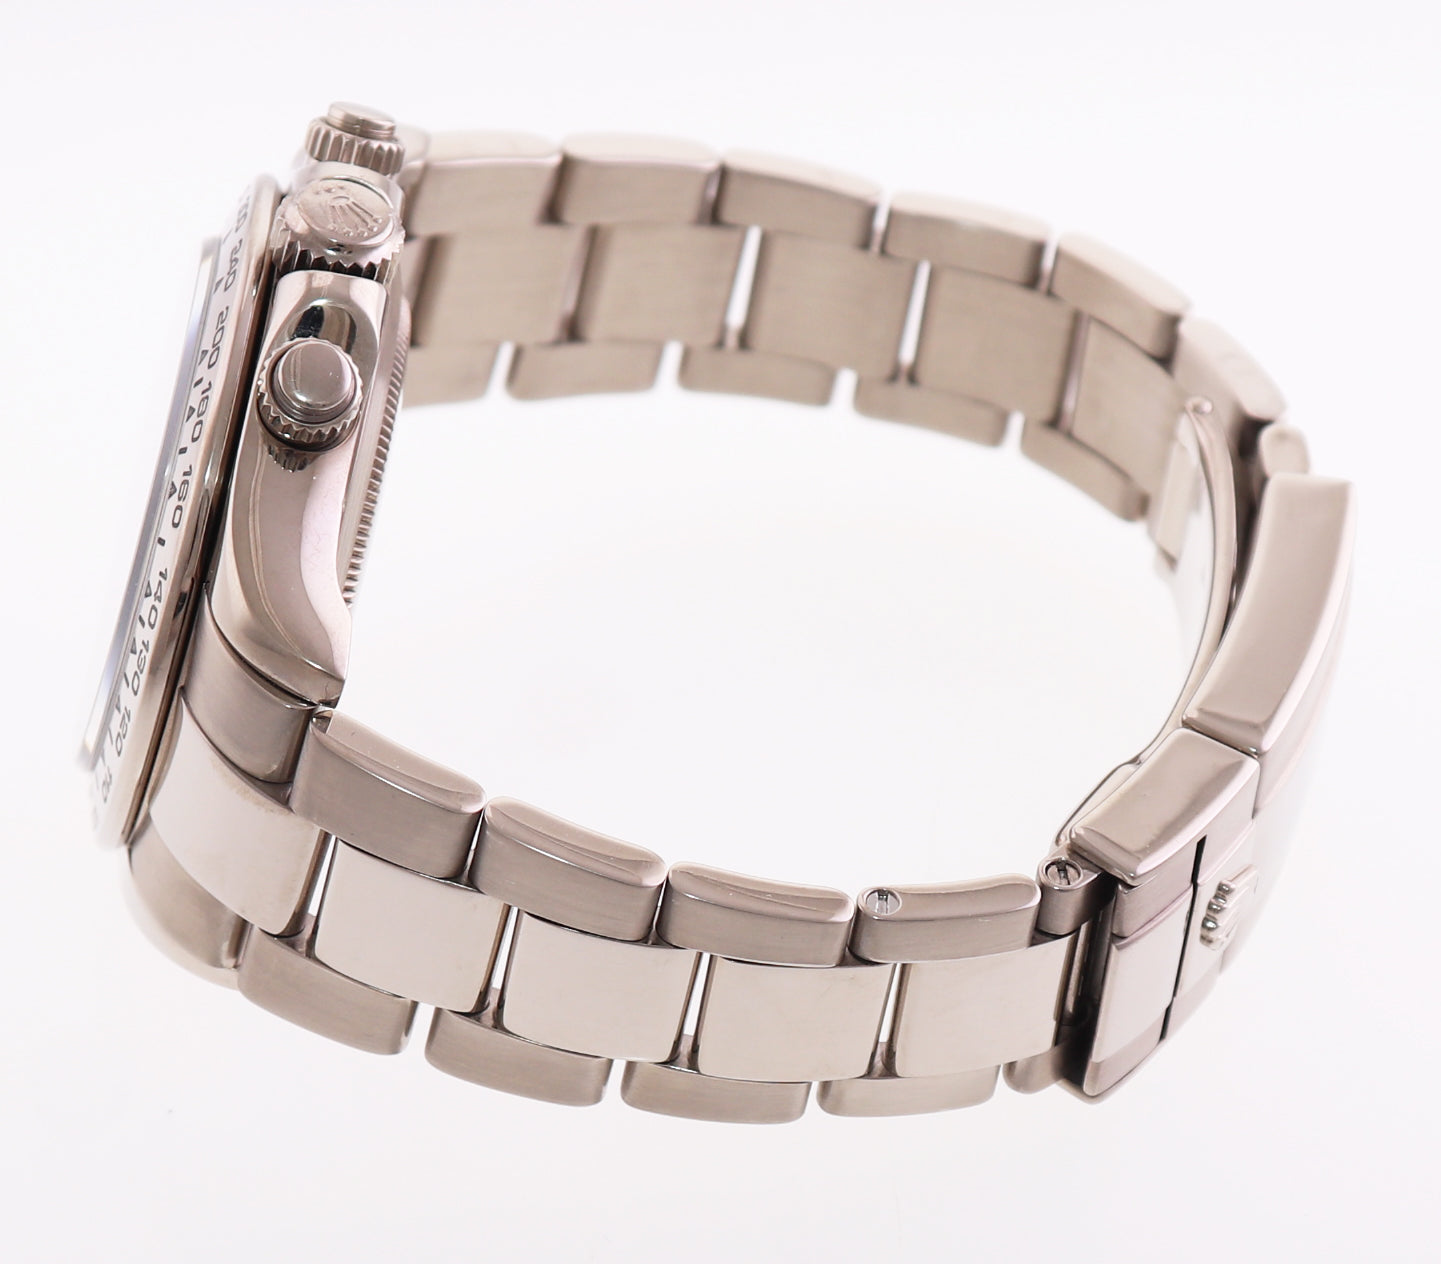 MINT 2012 Rolex Daytona Black Diamond 116509 White Gold Chronograph Watch